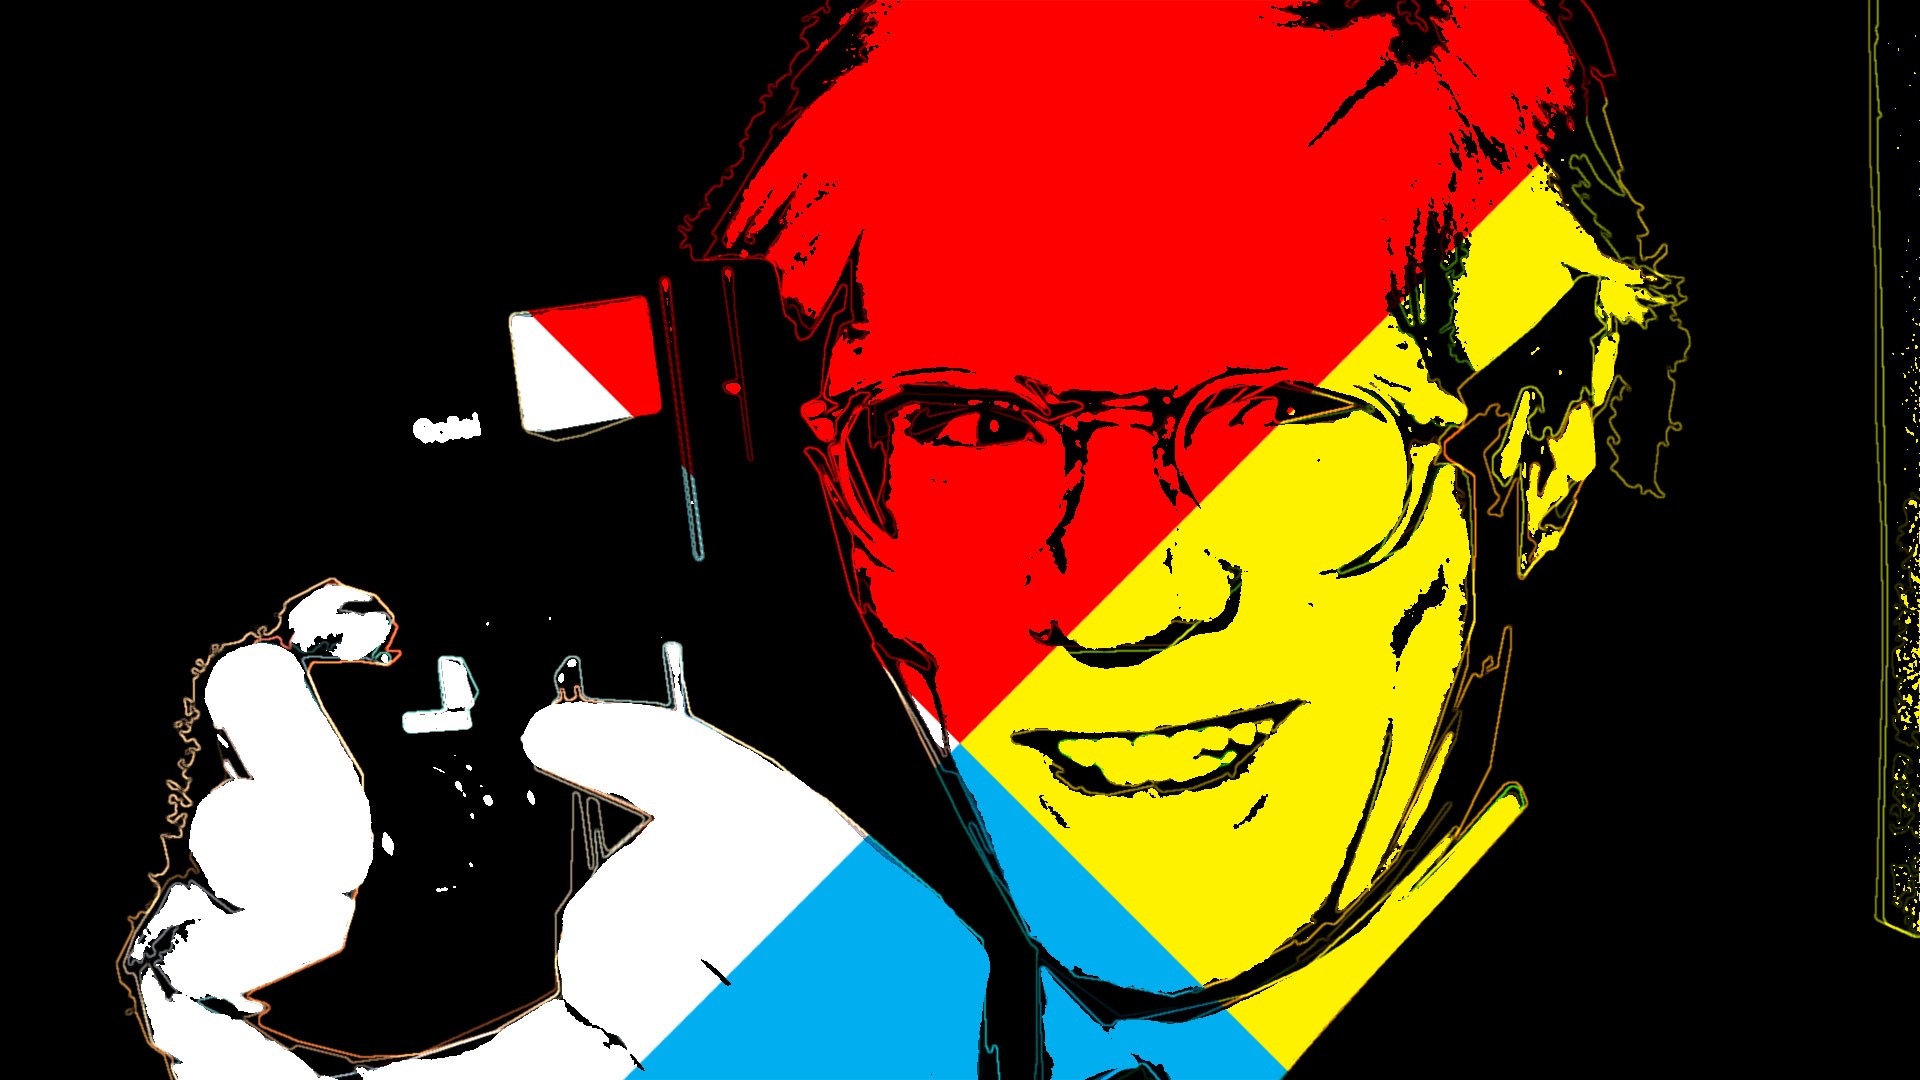 Andy Warhol Digital Art Celebrity Artwork Red 1920x1080